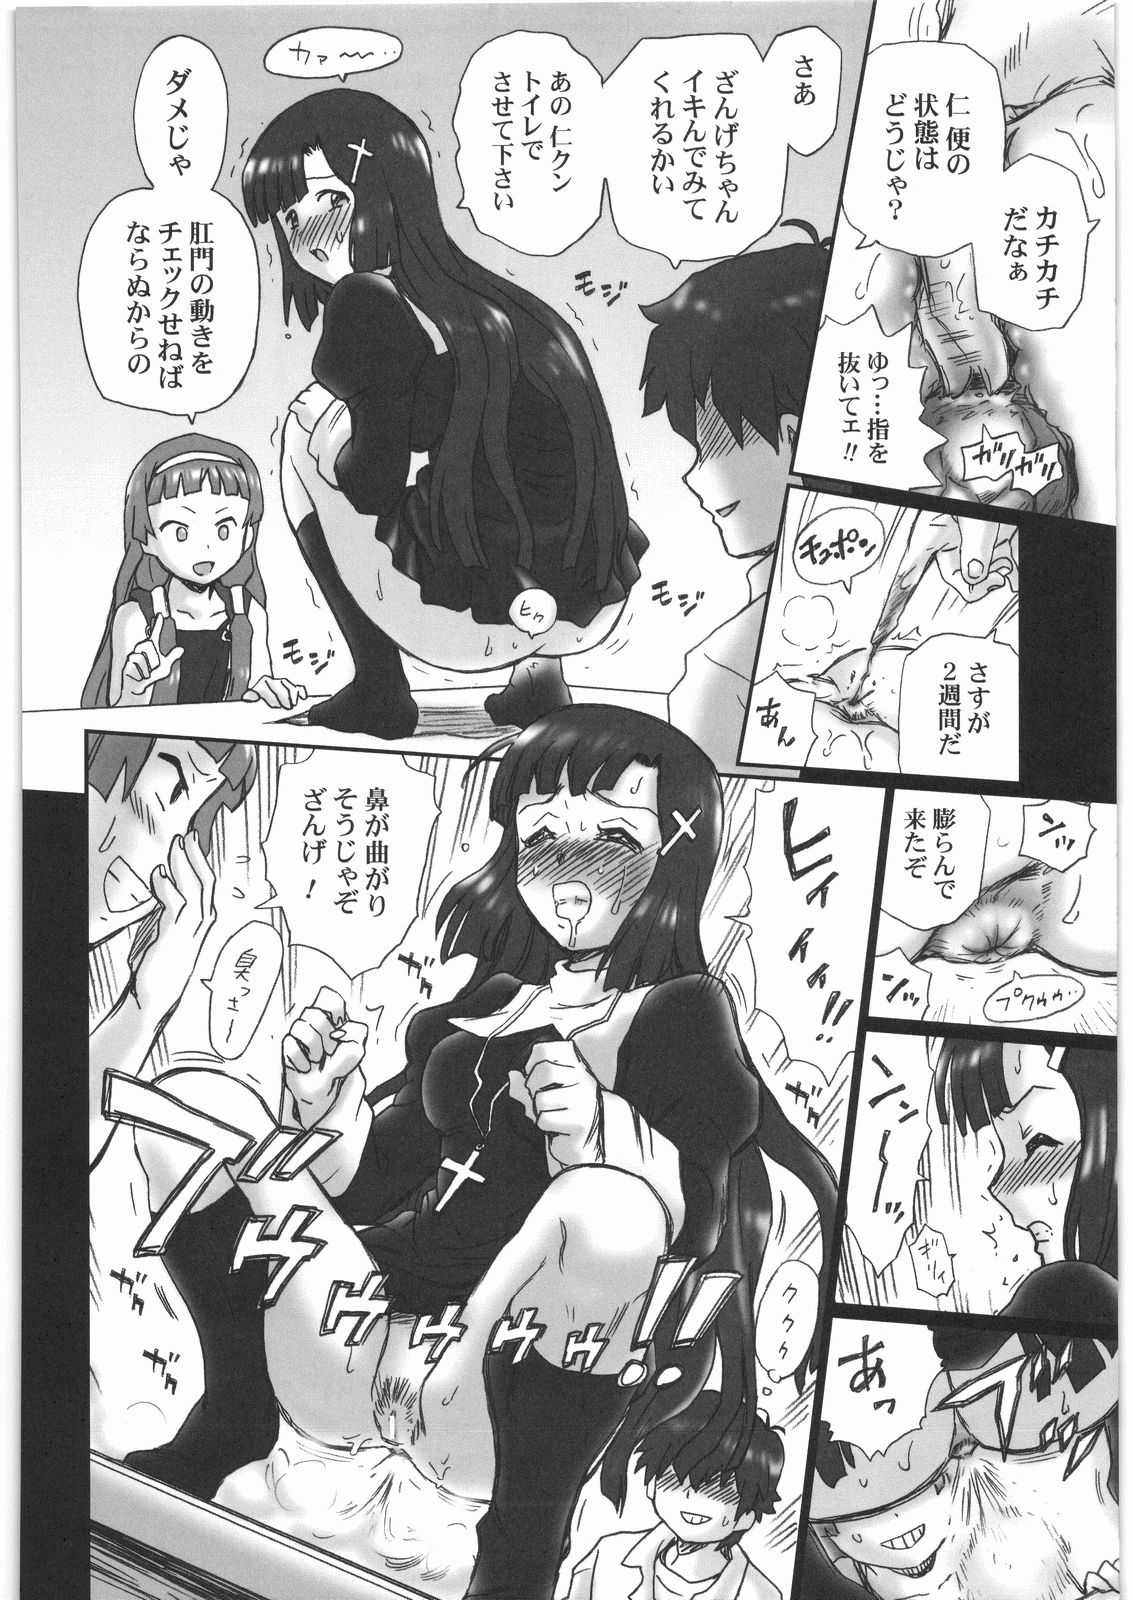 (SC42) [Rat Tail (Irie Yamazaki)] TAIL MAN KANNAGI BOOK (Kannagi) (SC42) [Rat Tail (Irie Yamazaki)] TAIL MAN KANNAGI BOOK (かんなぎ)